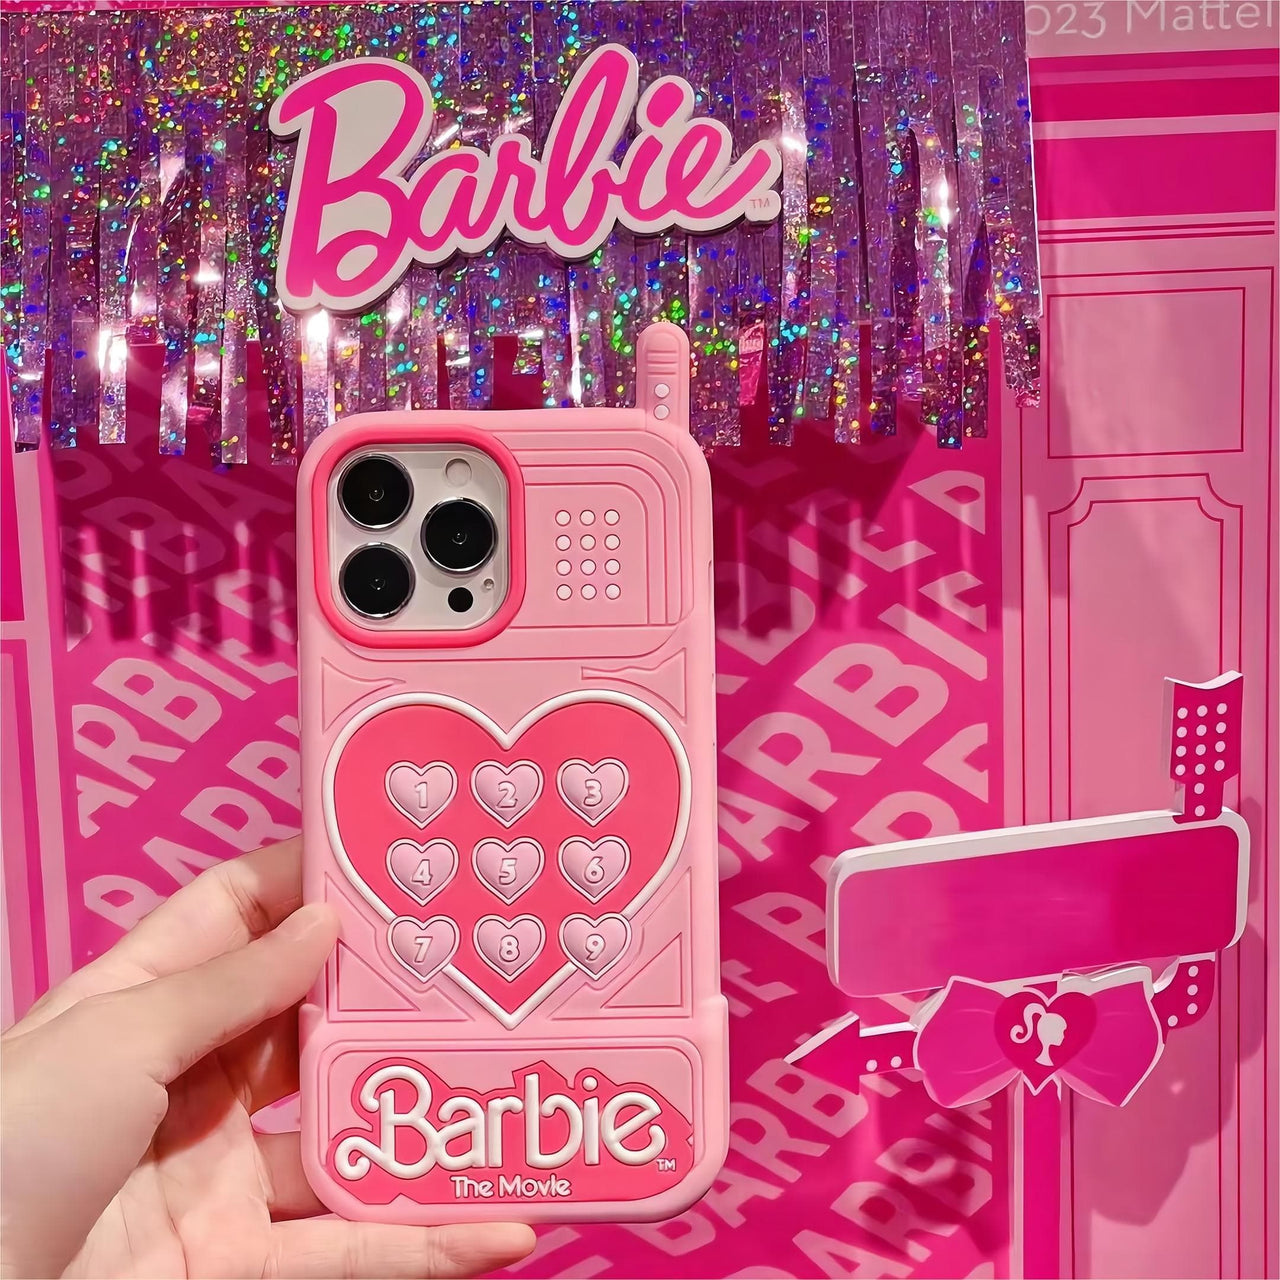 Barbie Heart iPhone 8 Plus Case